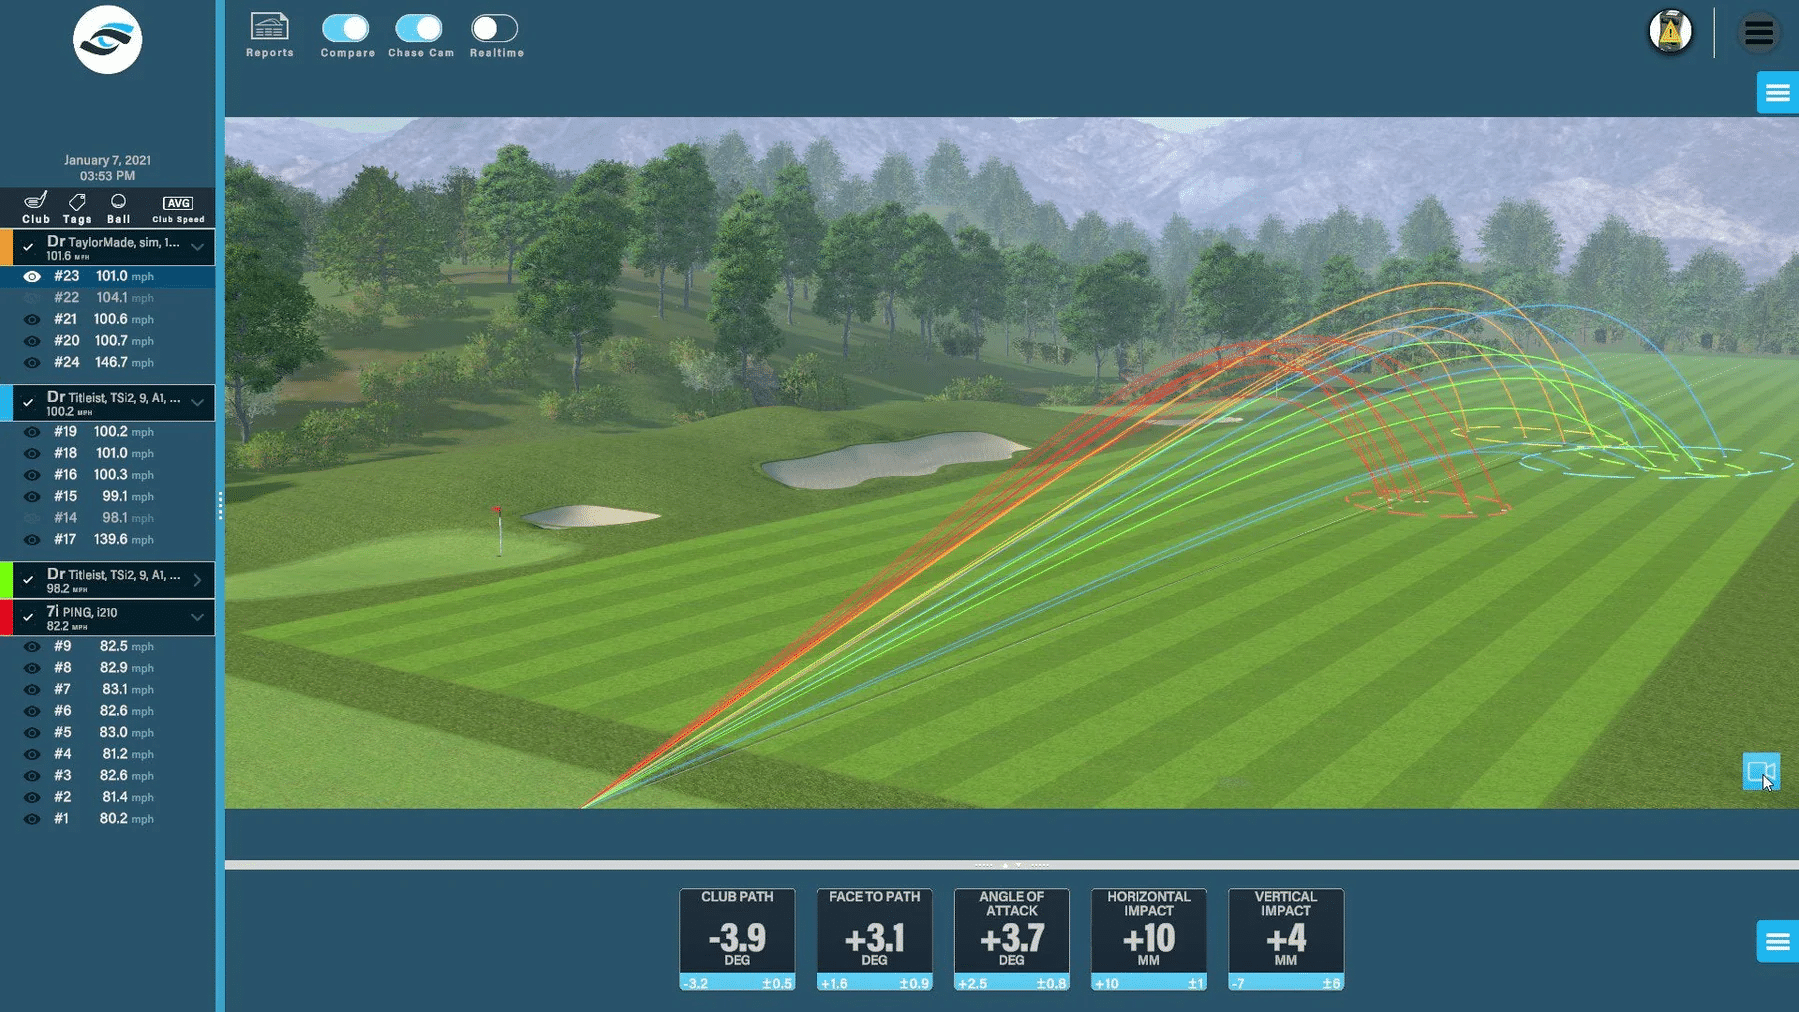 Foresight Sports Sim in a Box Birdie Plus Package Golf Simulator